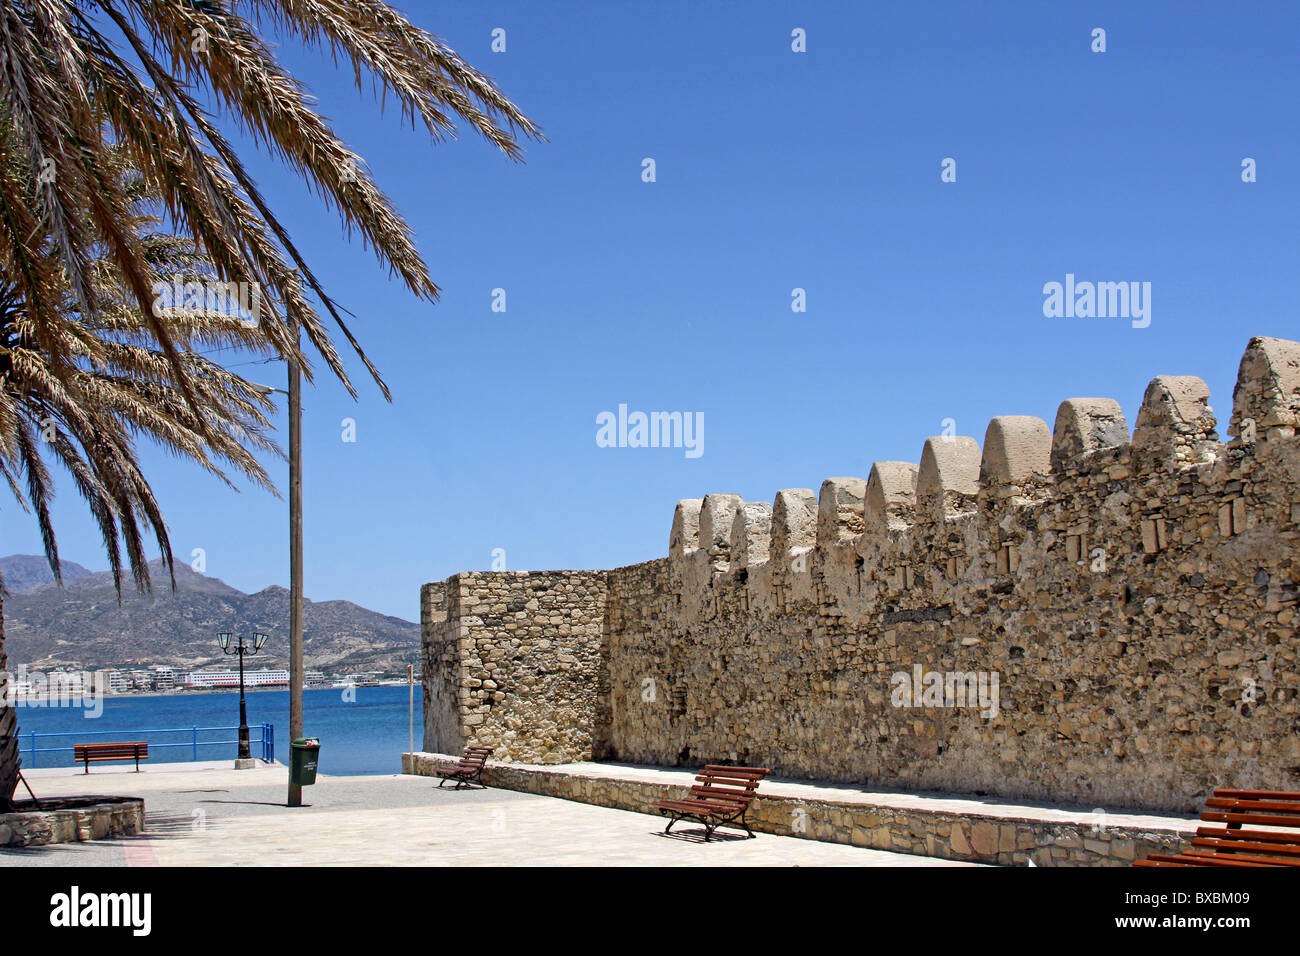 Festung von Kales, venezianische Festung, Ierapetra, Kreta, Griechenland, Europa Stockfoto